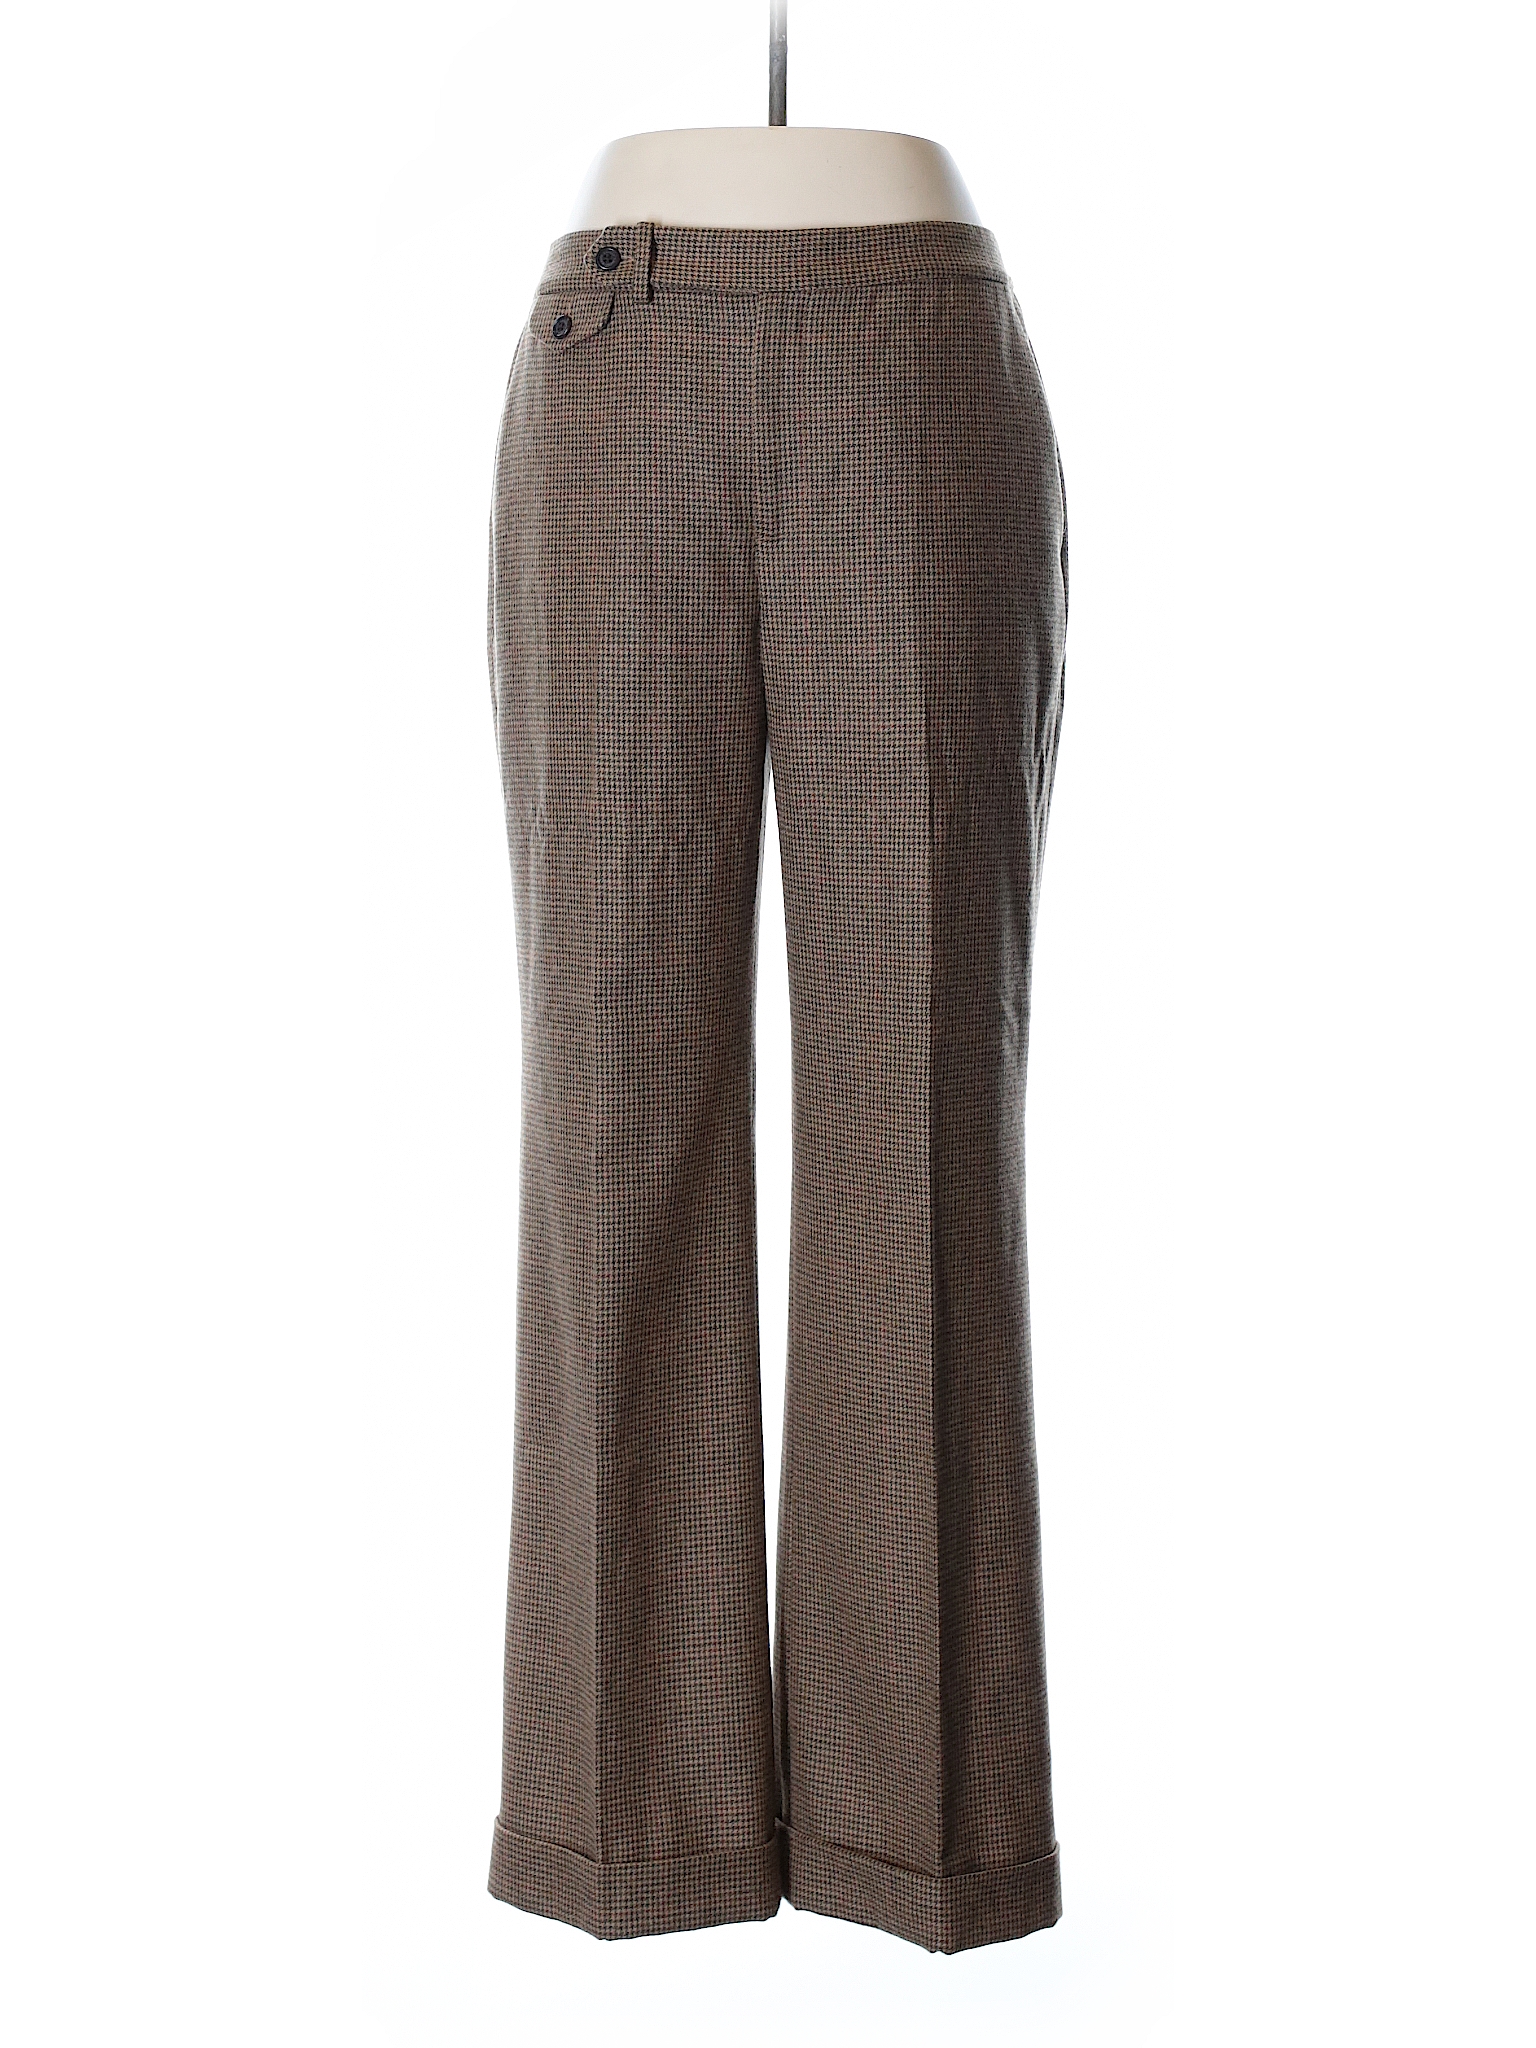 Lauren by Ralph Lauren 100% Wool Print Brown Wool Pants Size 10 (Petite ...